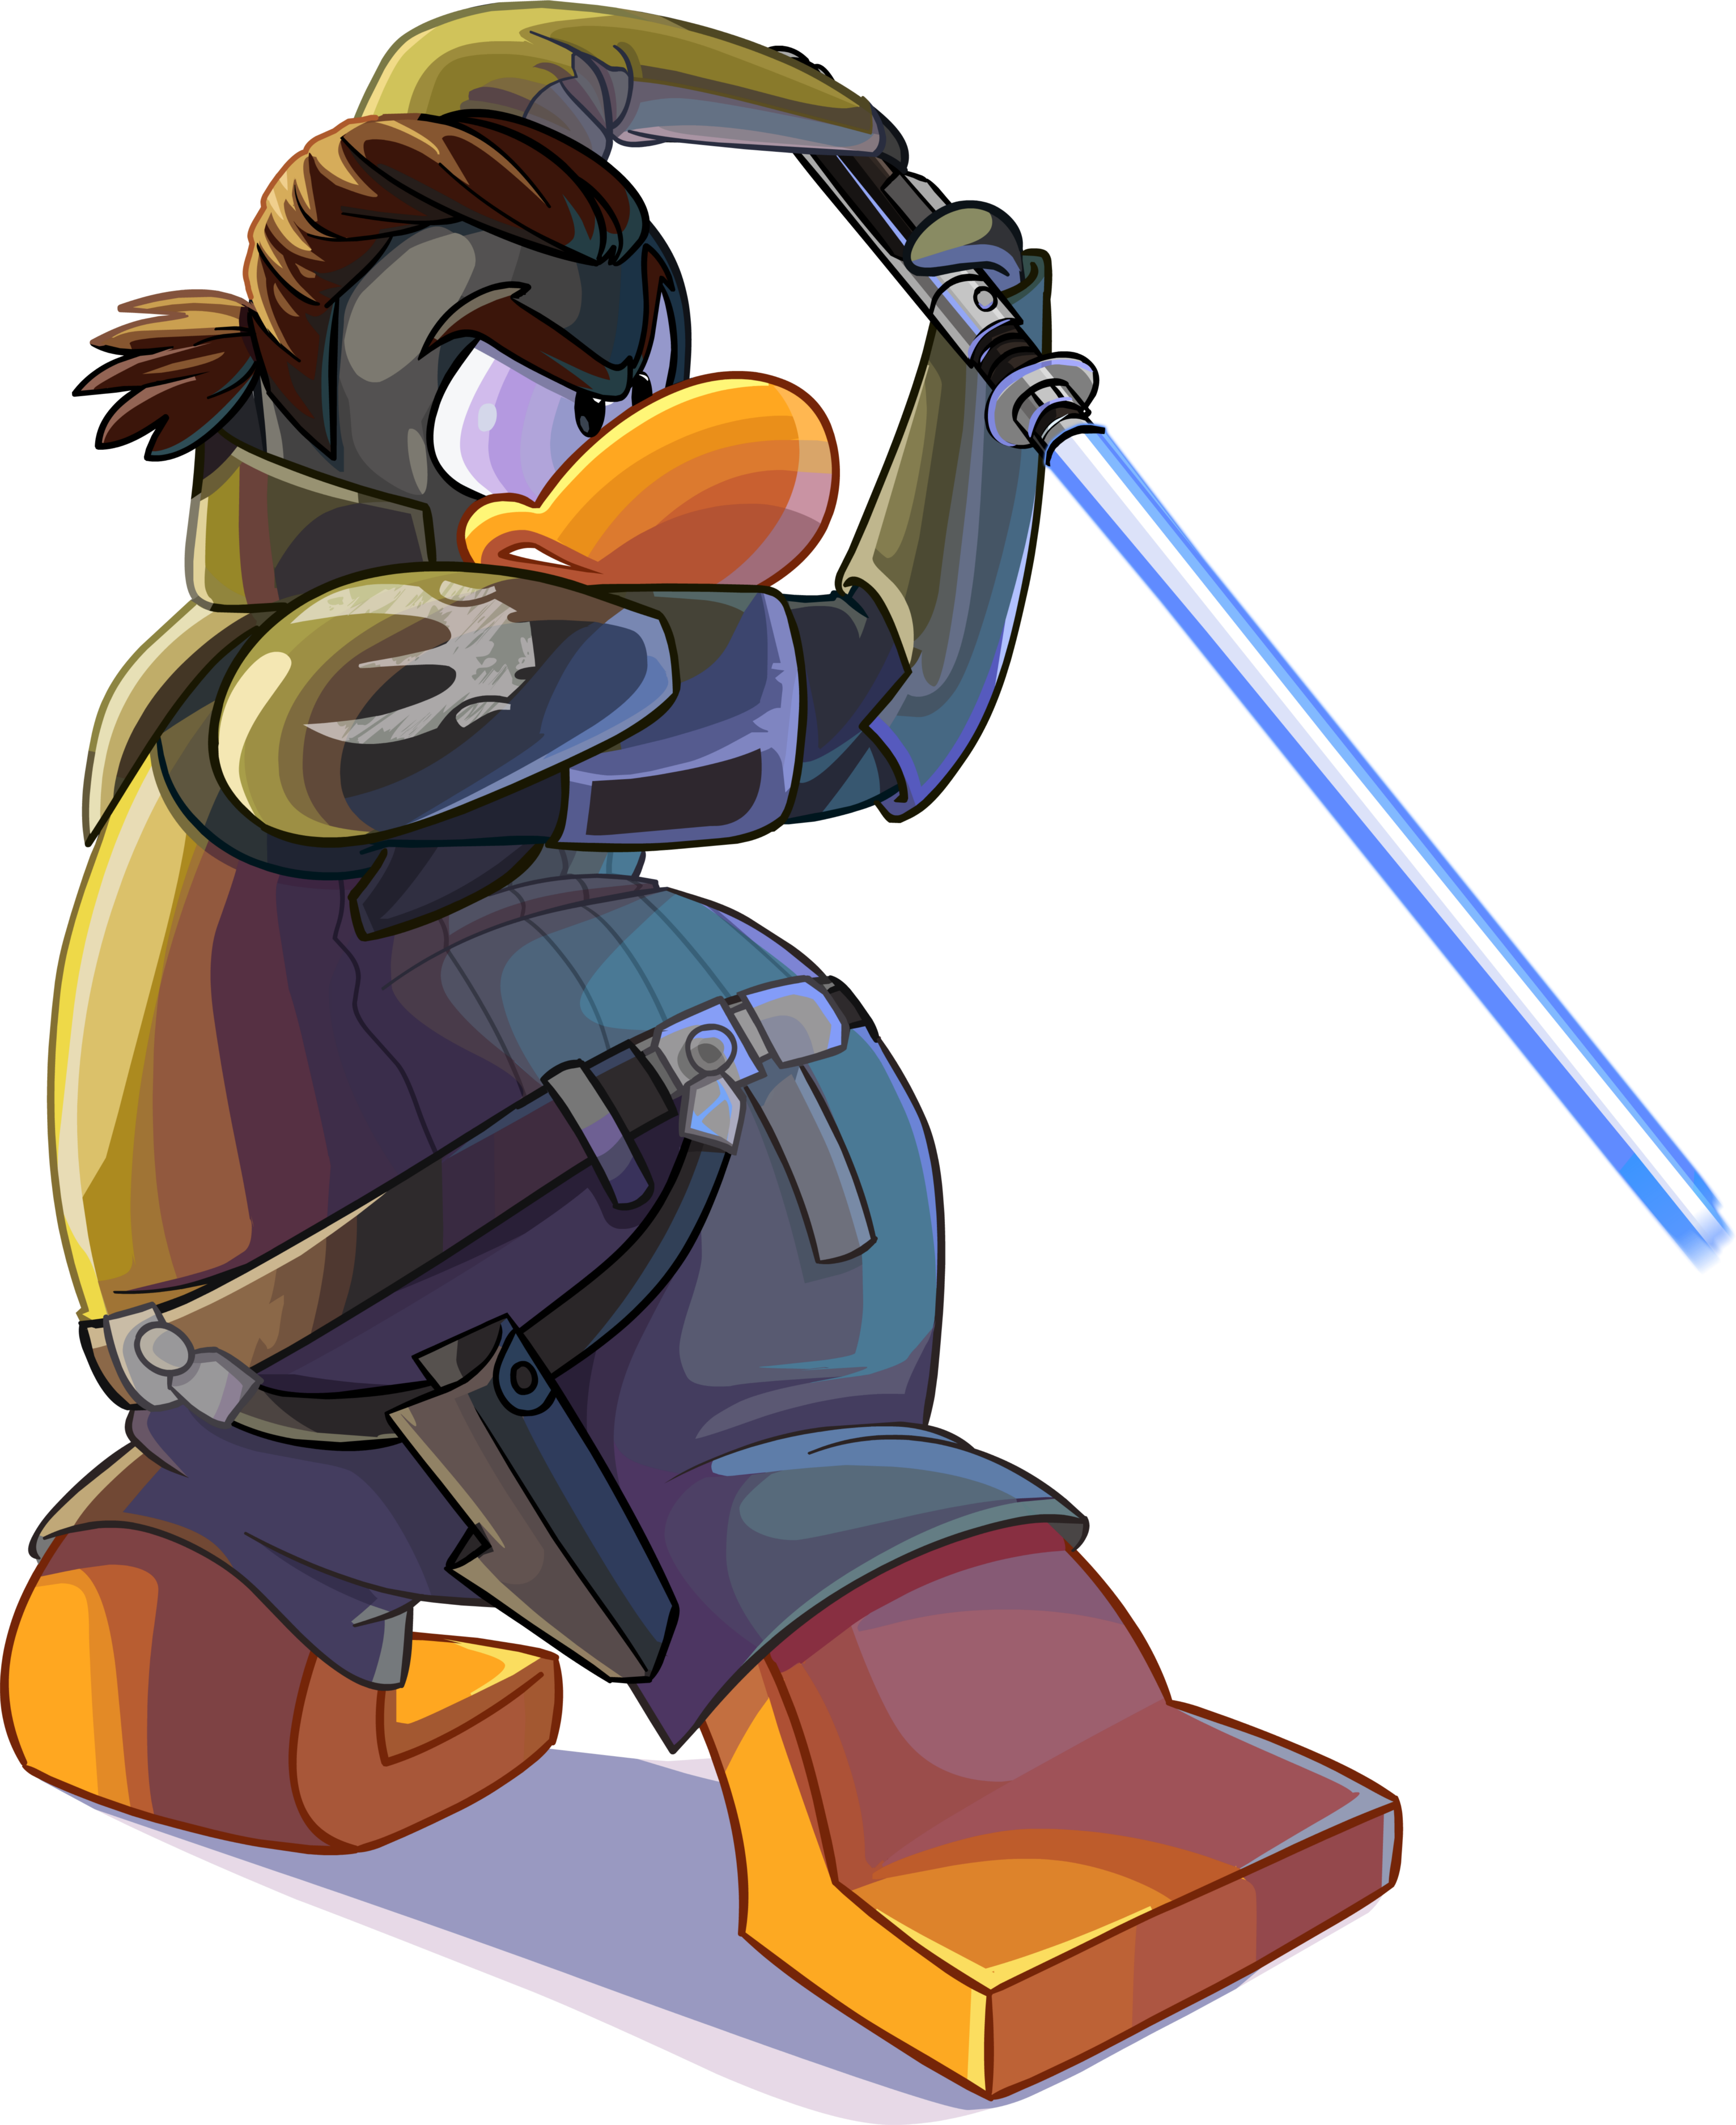 Kanan Jarrus - Club Penguin Star Wars Rebels (3063x3750)